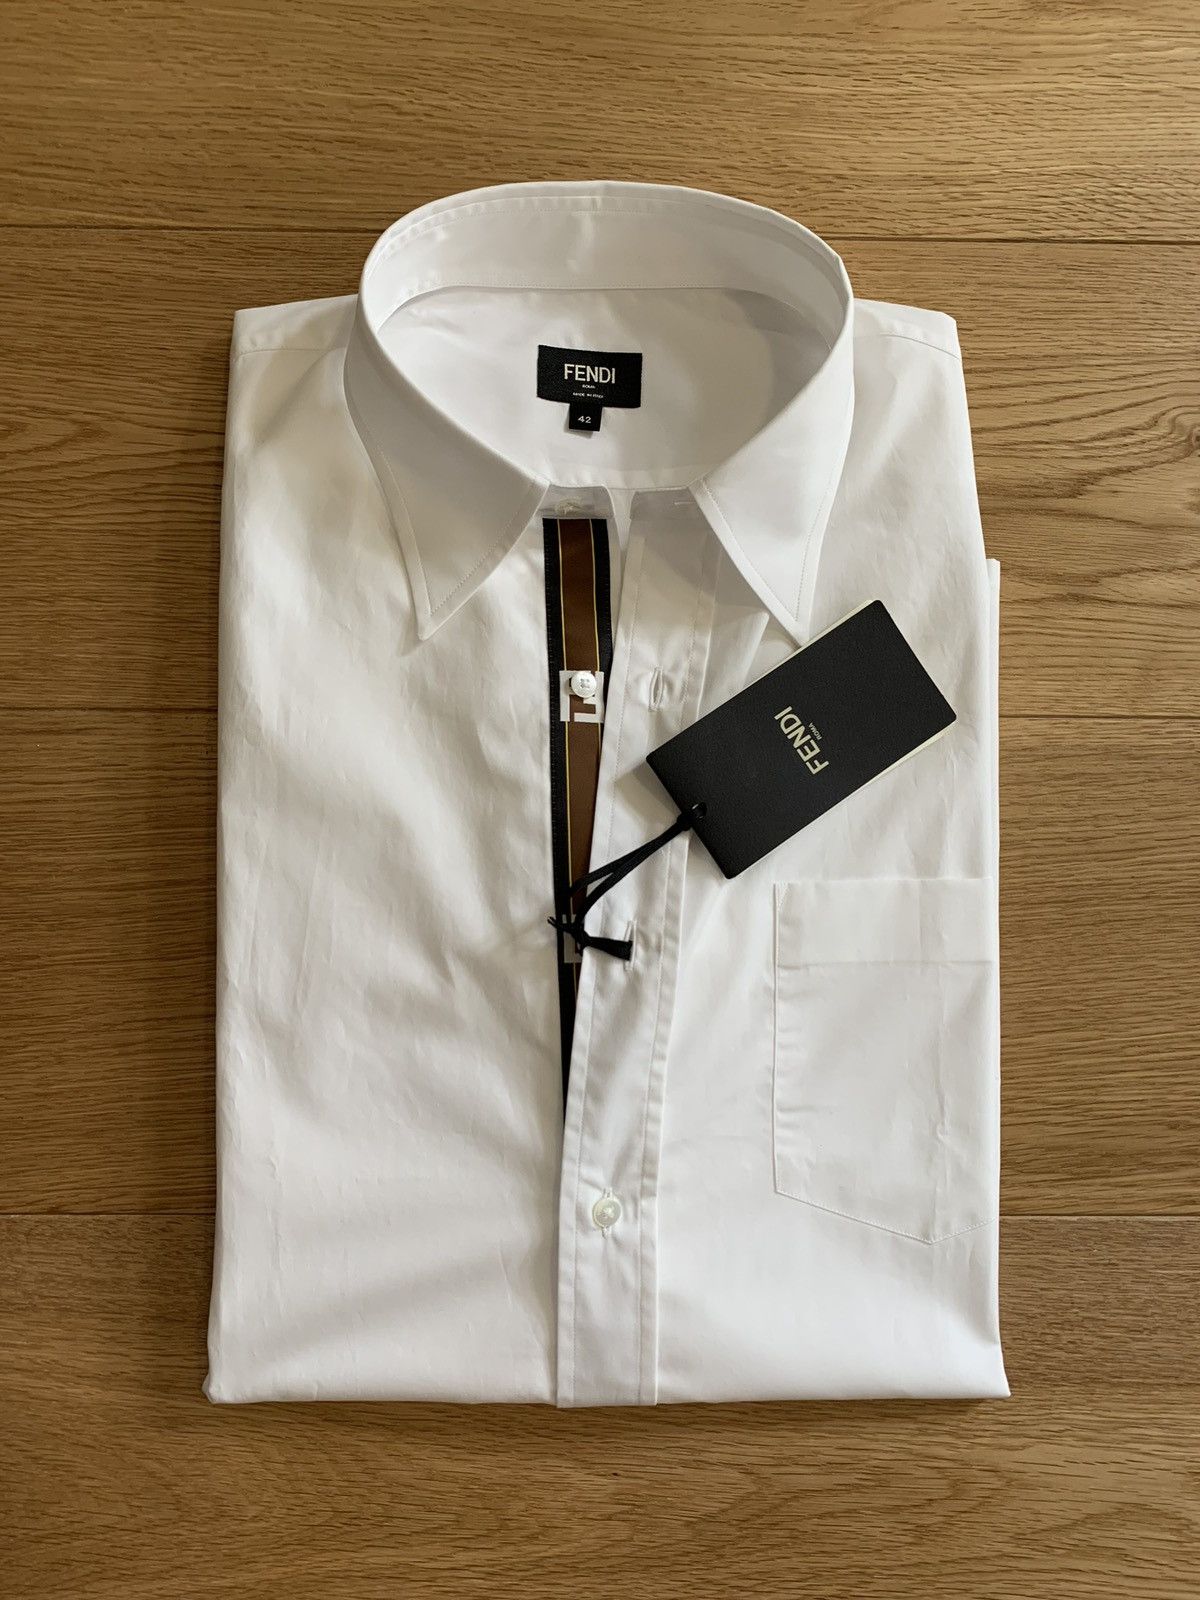 Fendi Fendi short sleeve boxy shirt | Grailed